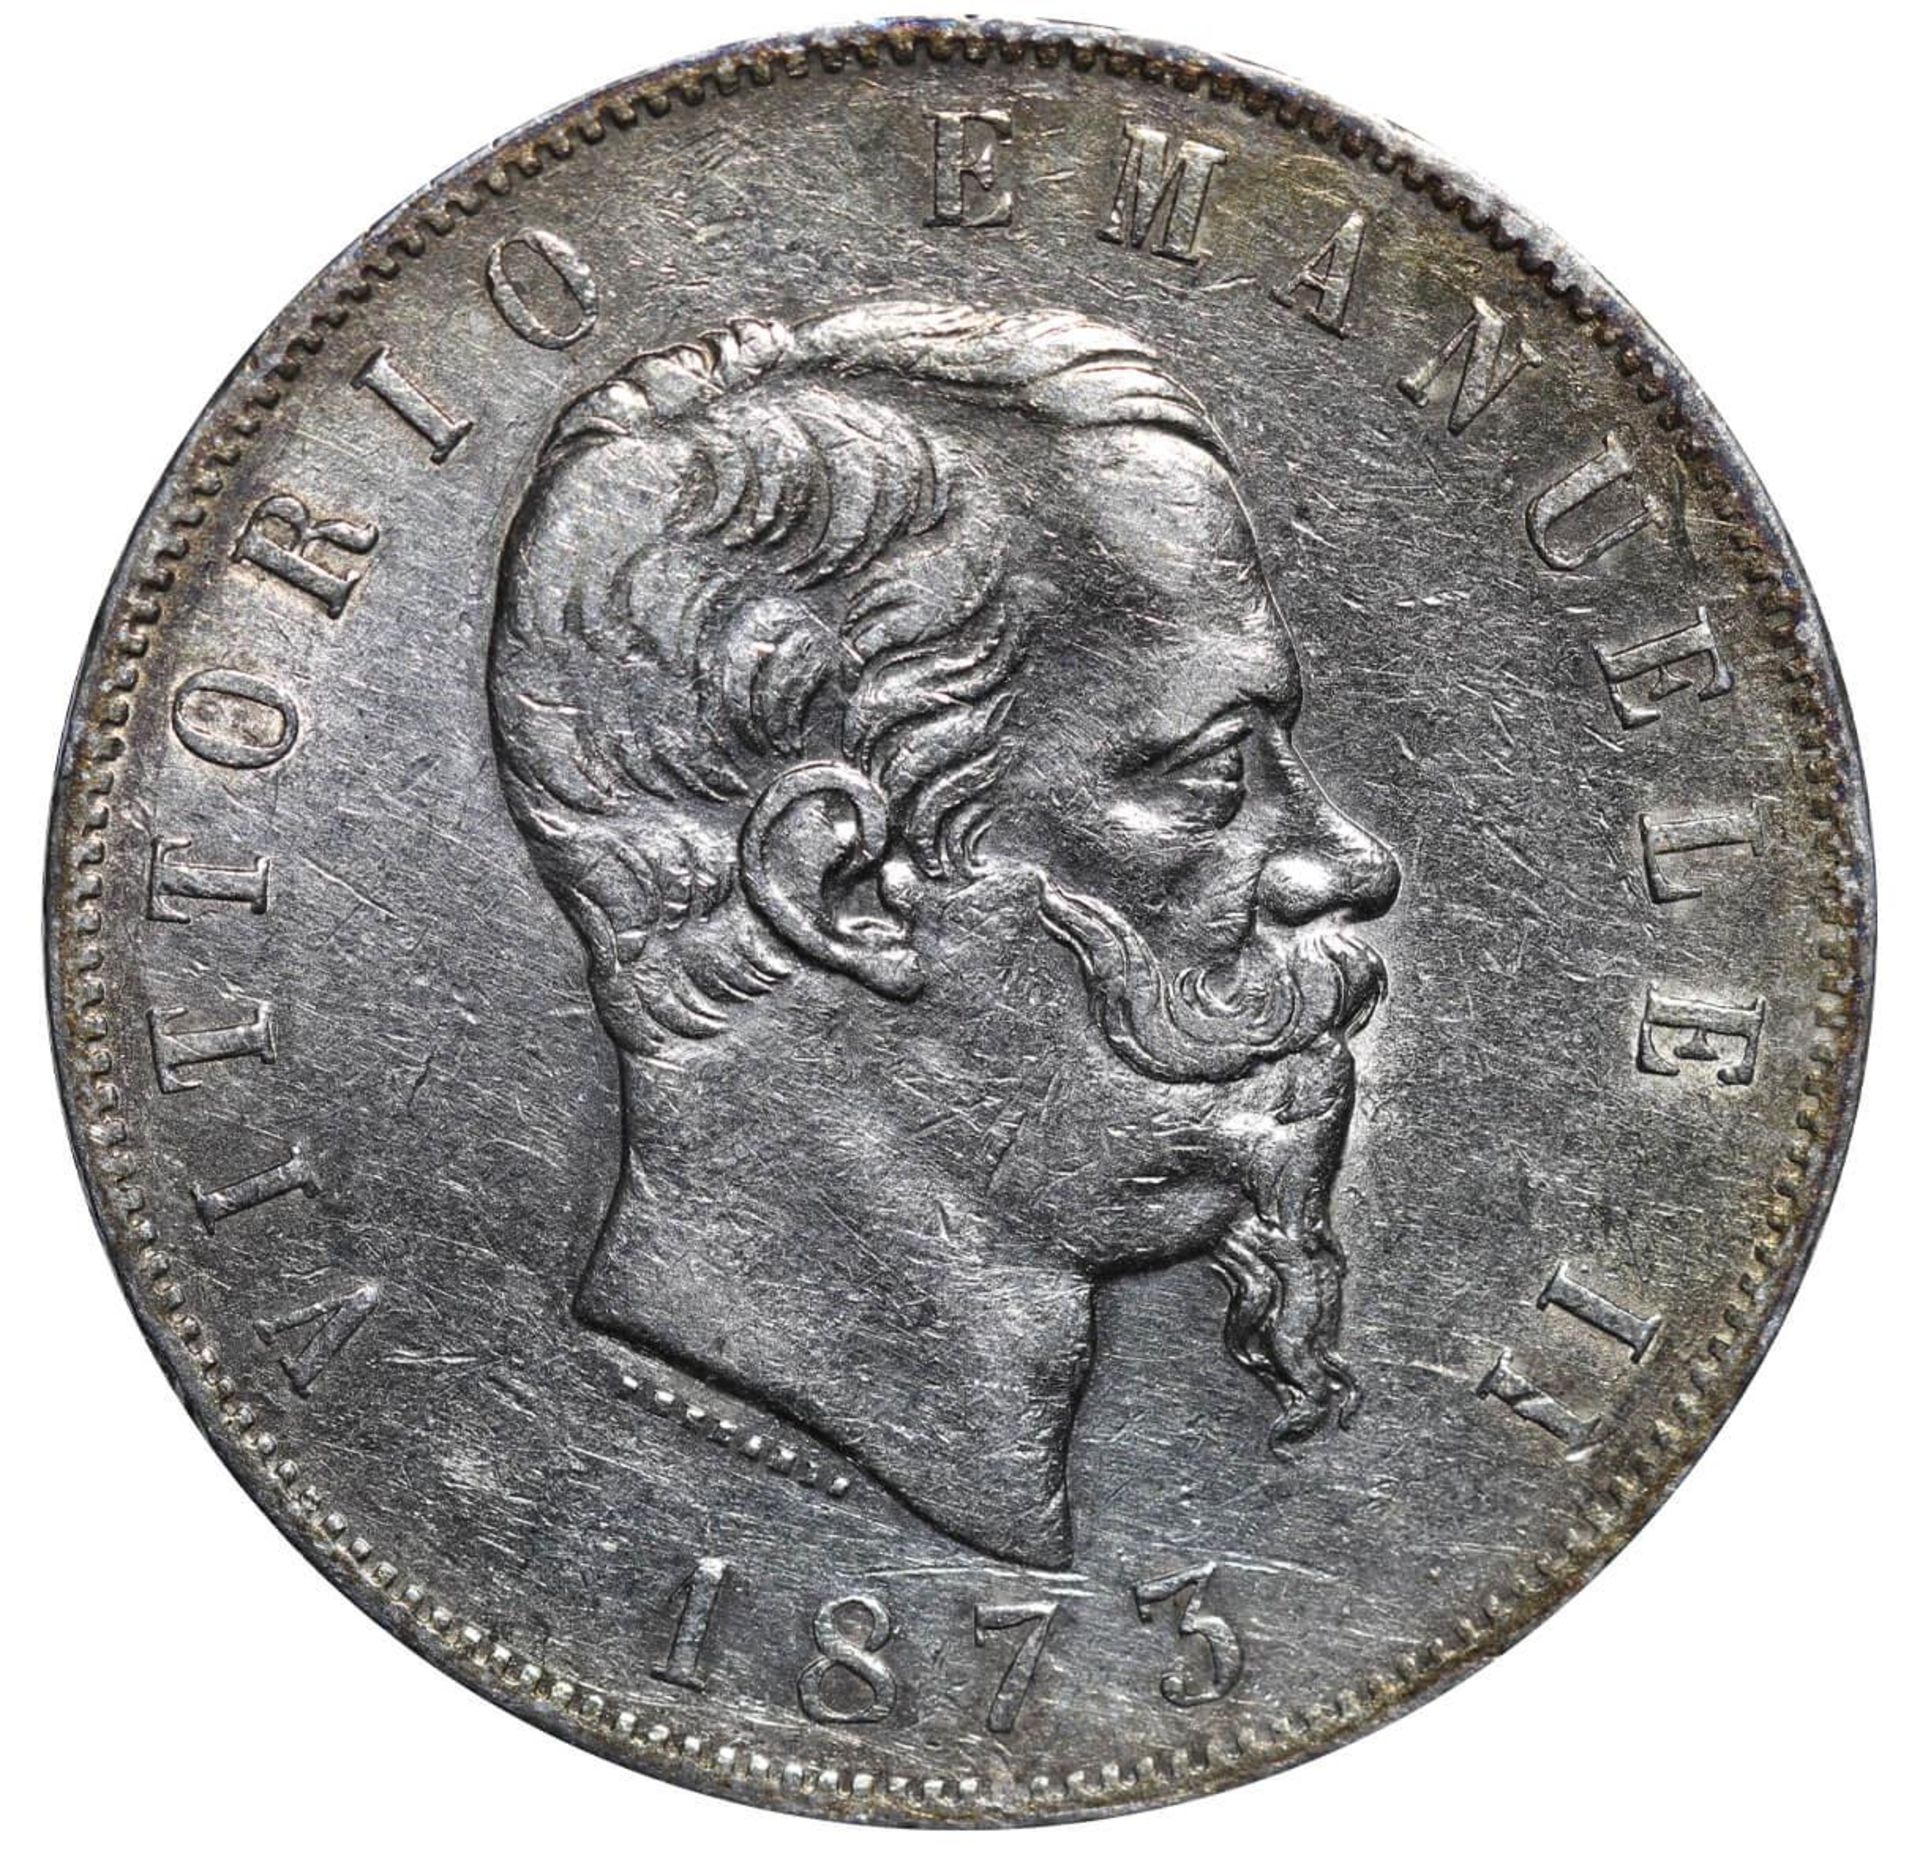 Italy, 5 Lire, 1873 year, M-B - Image 2 of 3